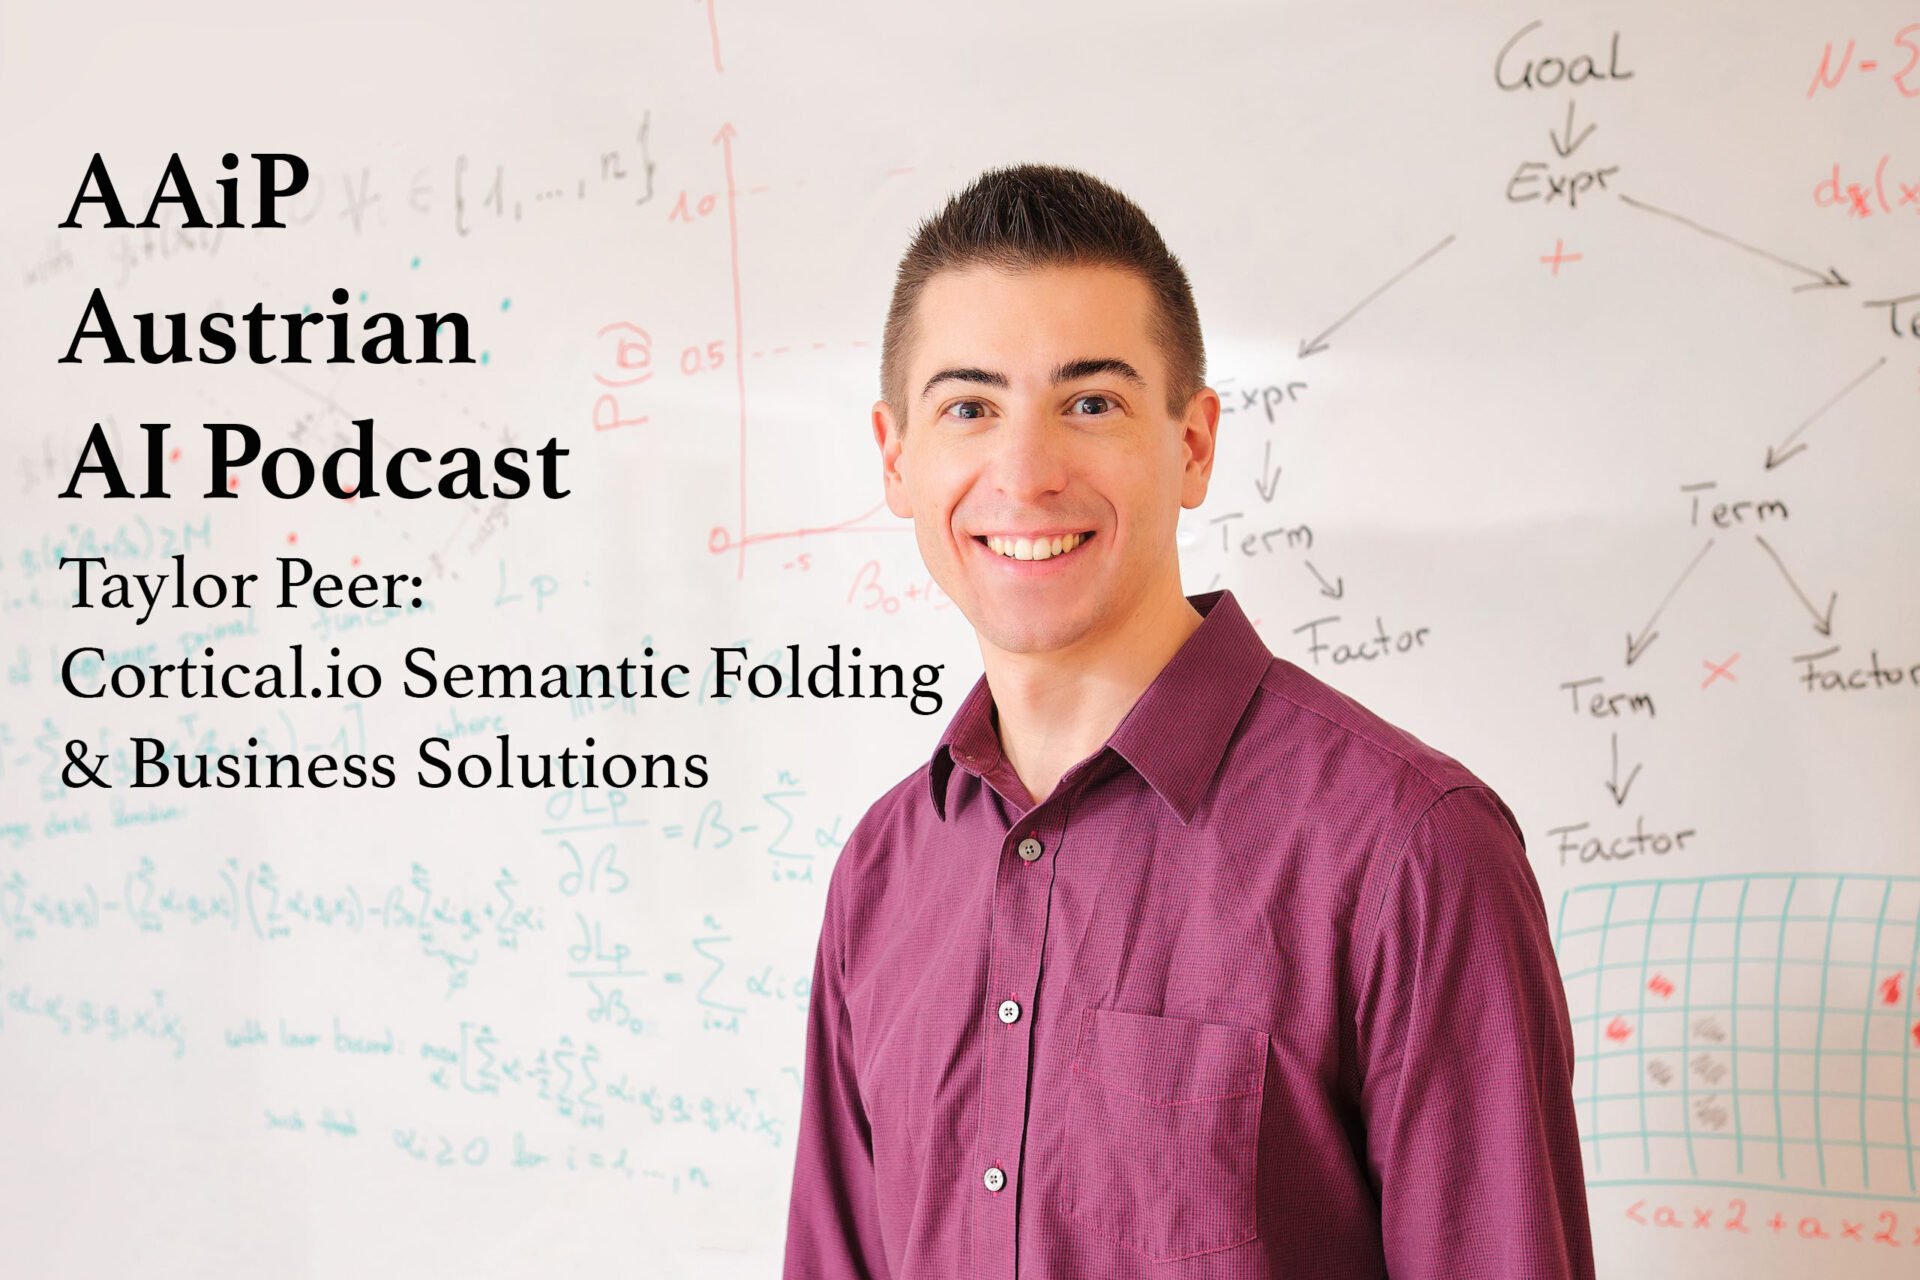 AAiP australian AI podcast -cortical semantic folding & business solutions